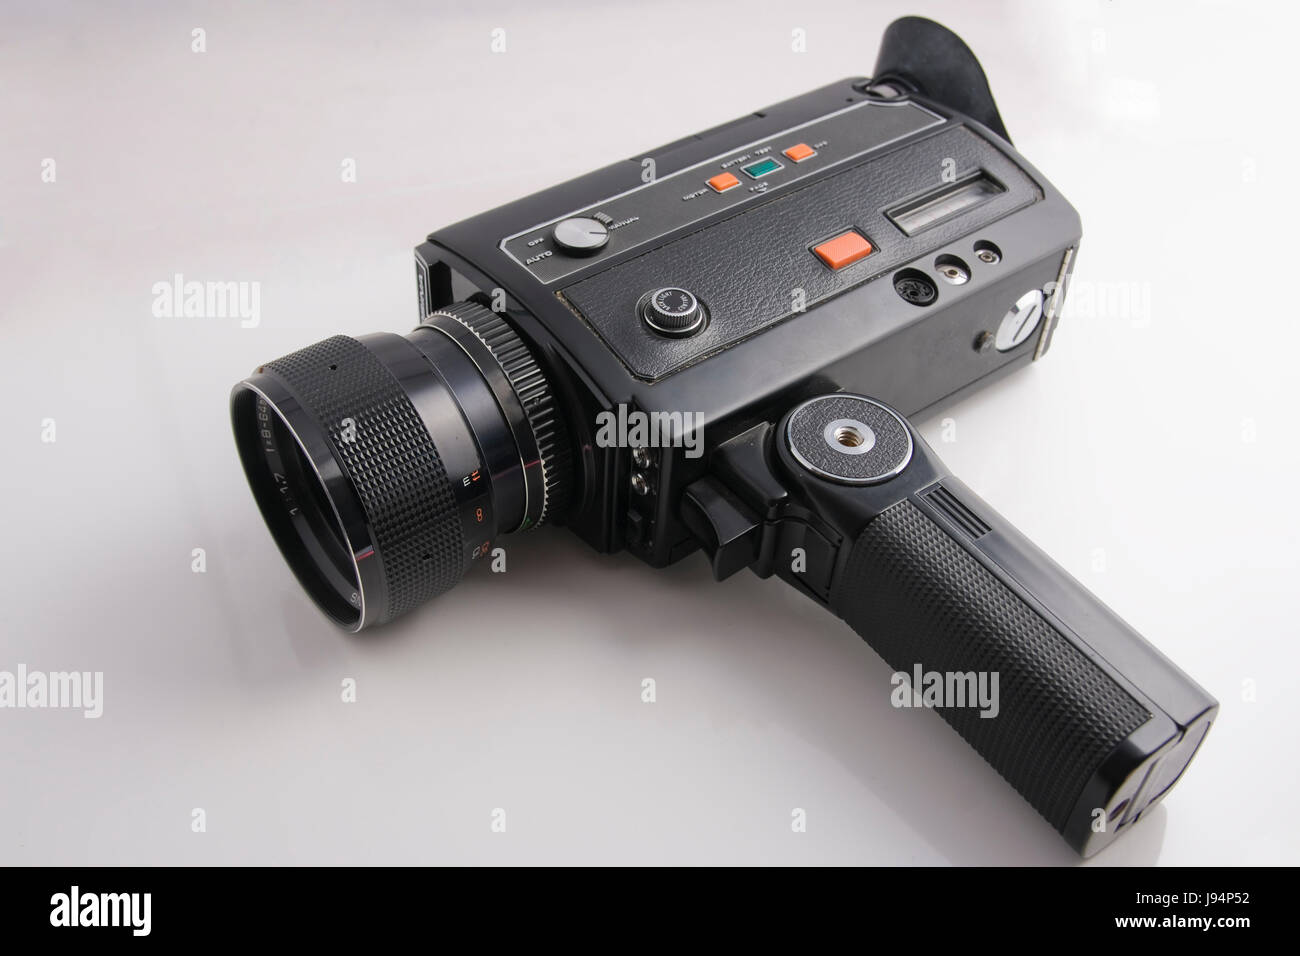 Cine Kamera, Film, Film, Filme, minderwertigen Film, Video-Kamera, analog  Stockfotografie - Alamy